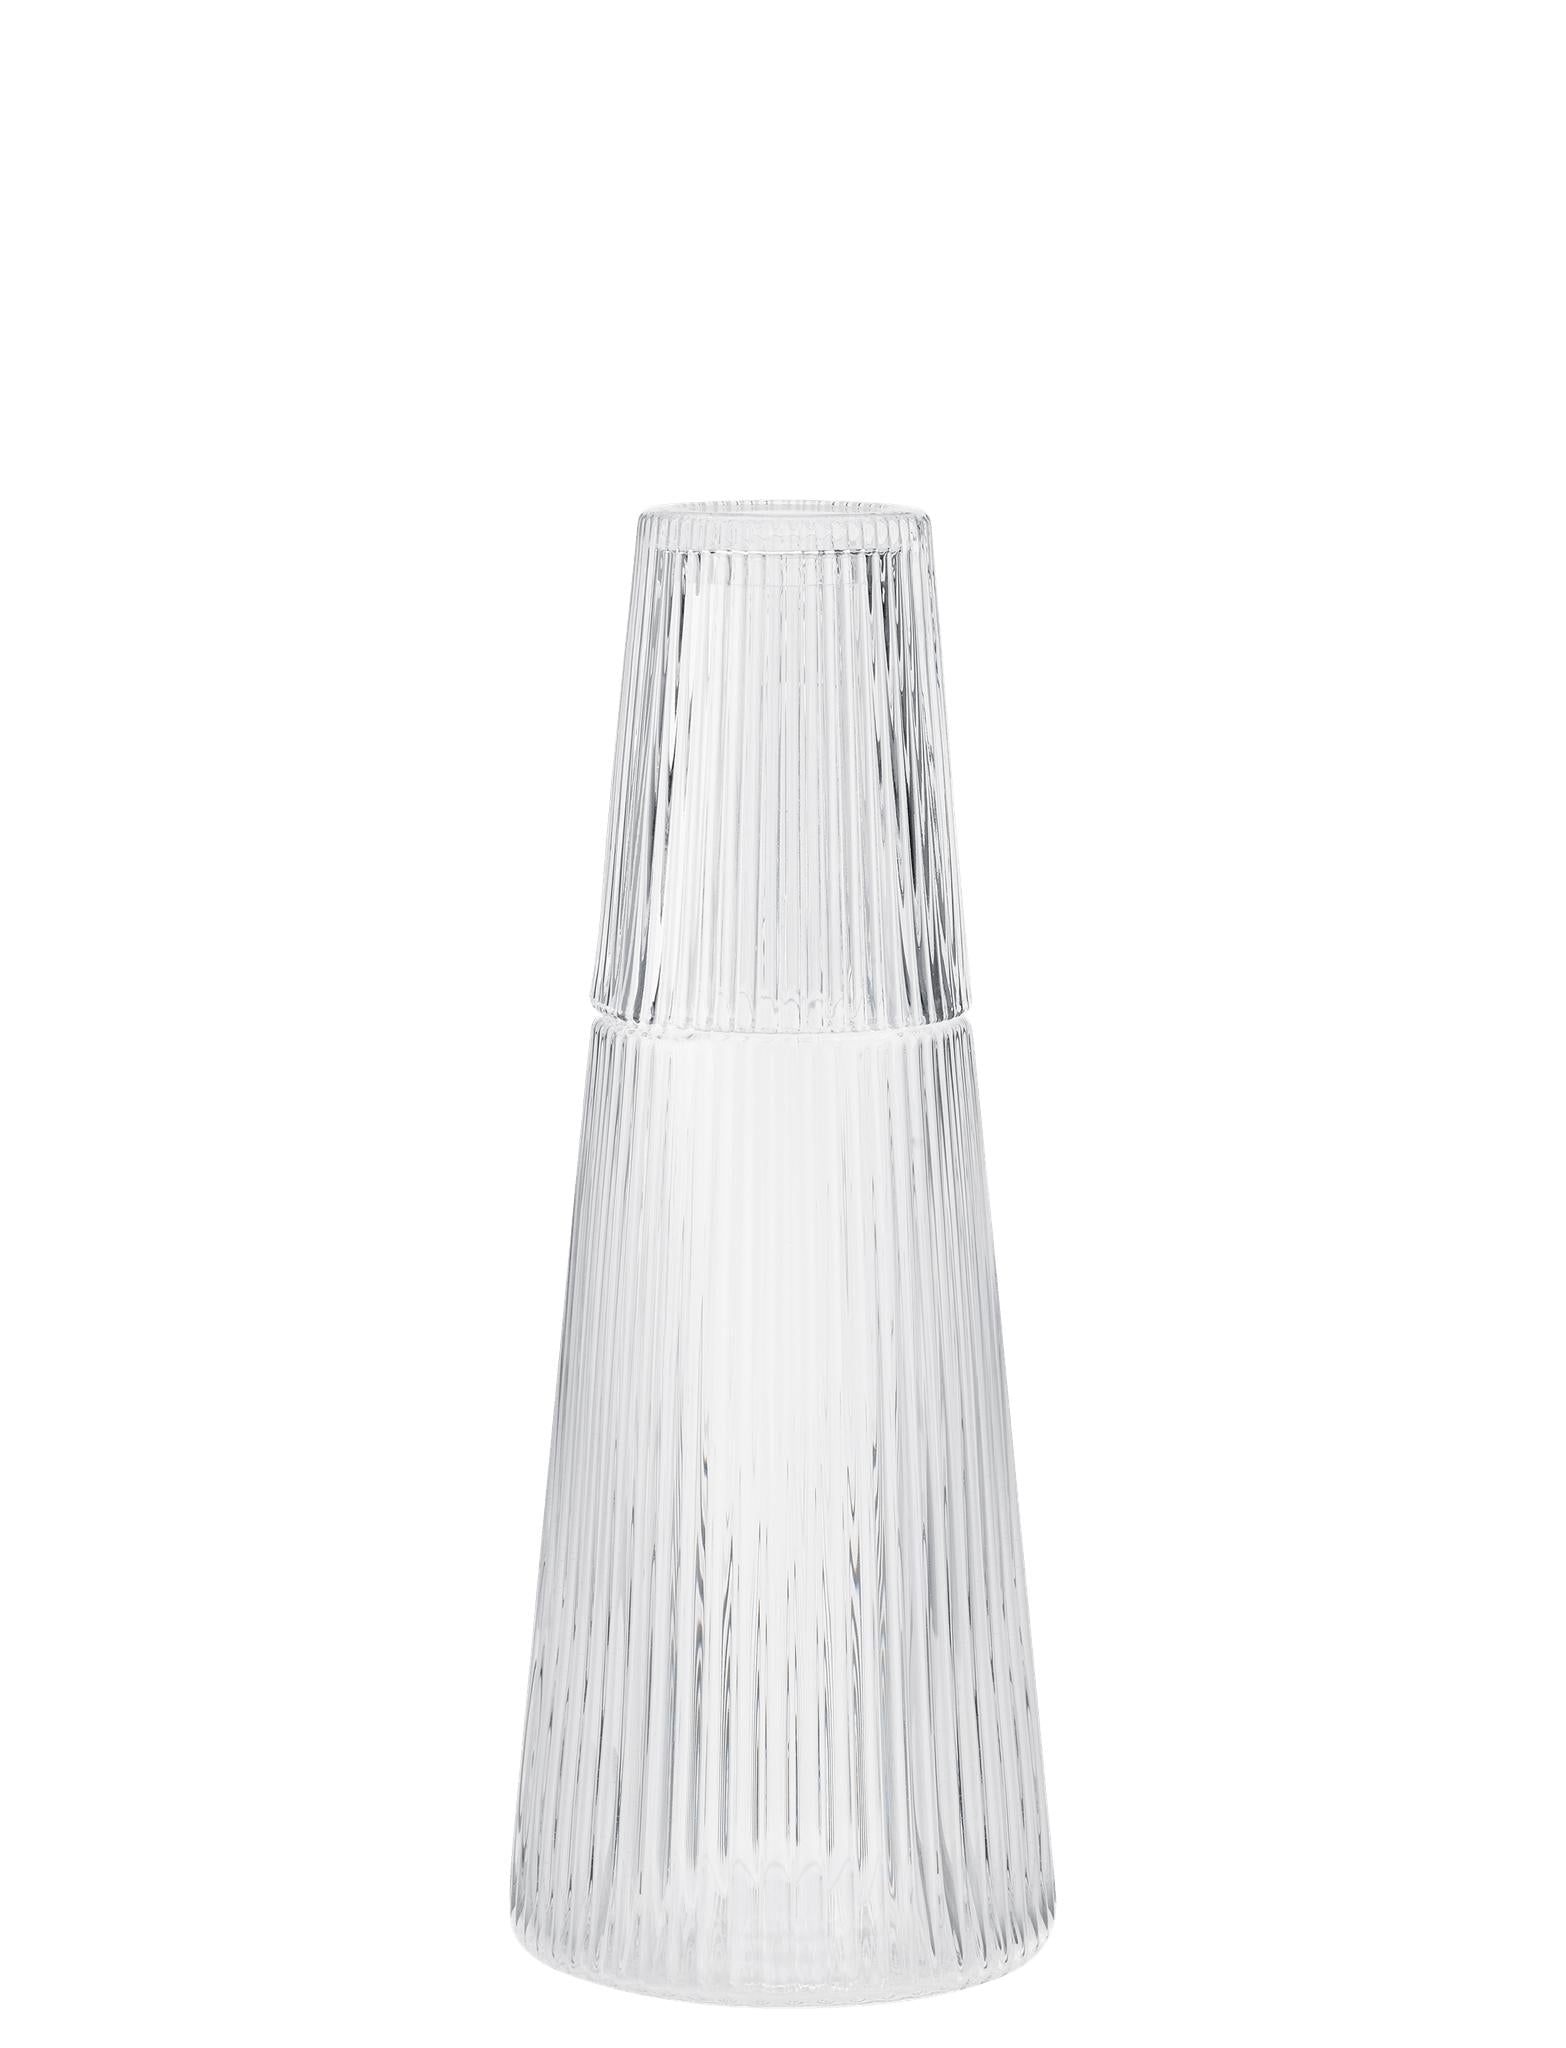 Stelton Pilastro -karaf met glas 1 l